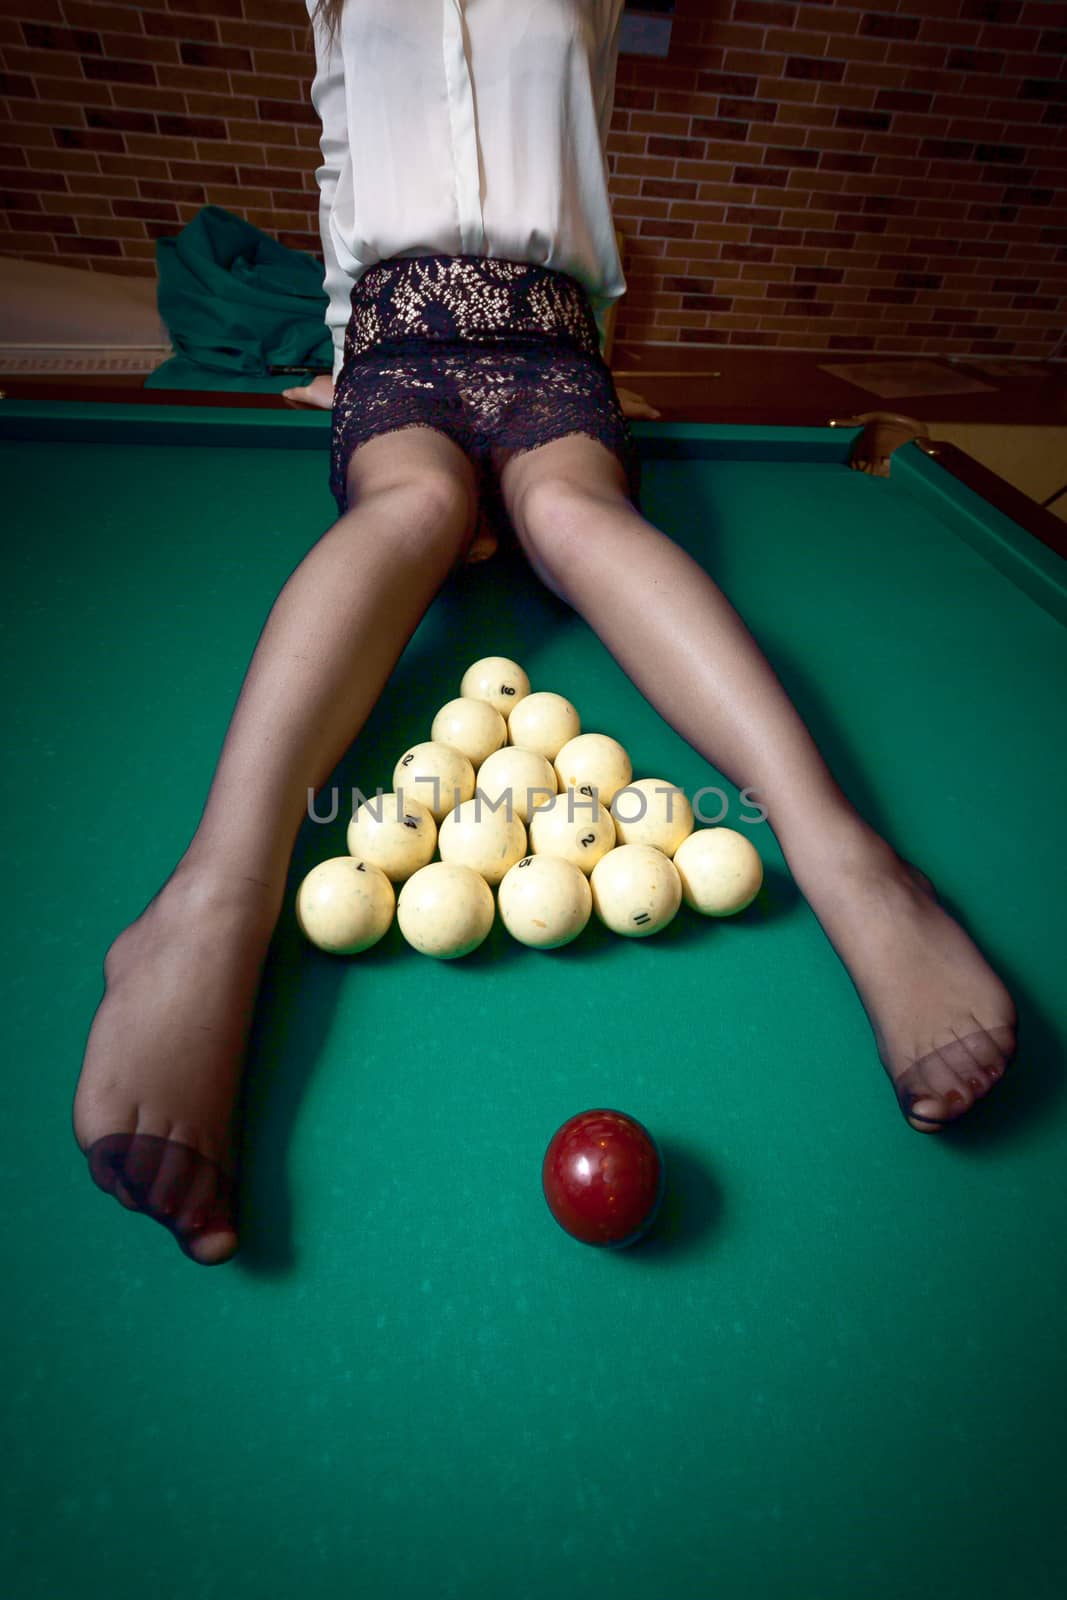 Sexy woman in stockings sitting on billiard table